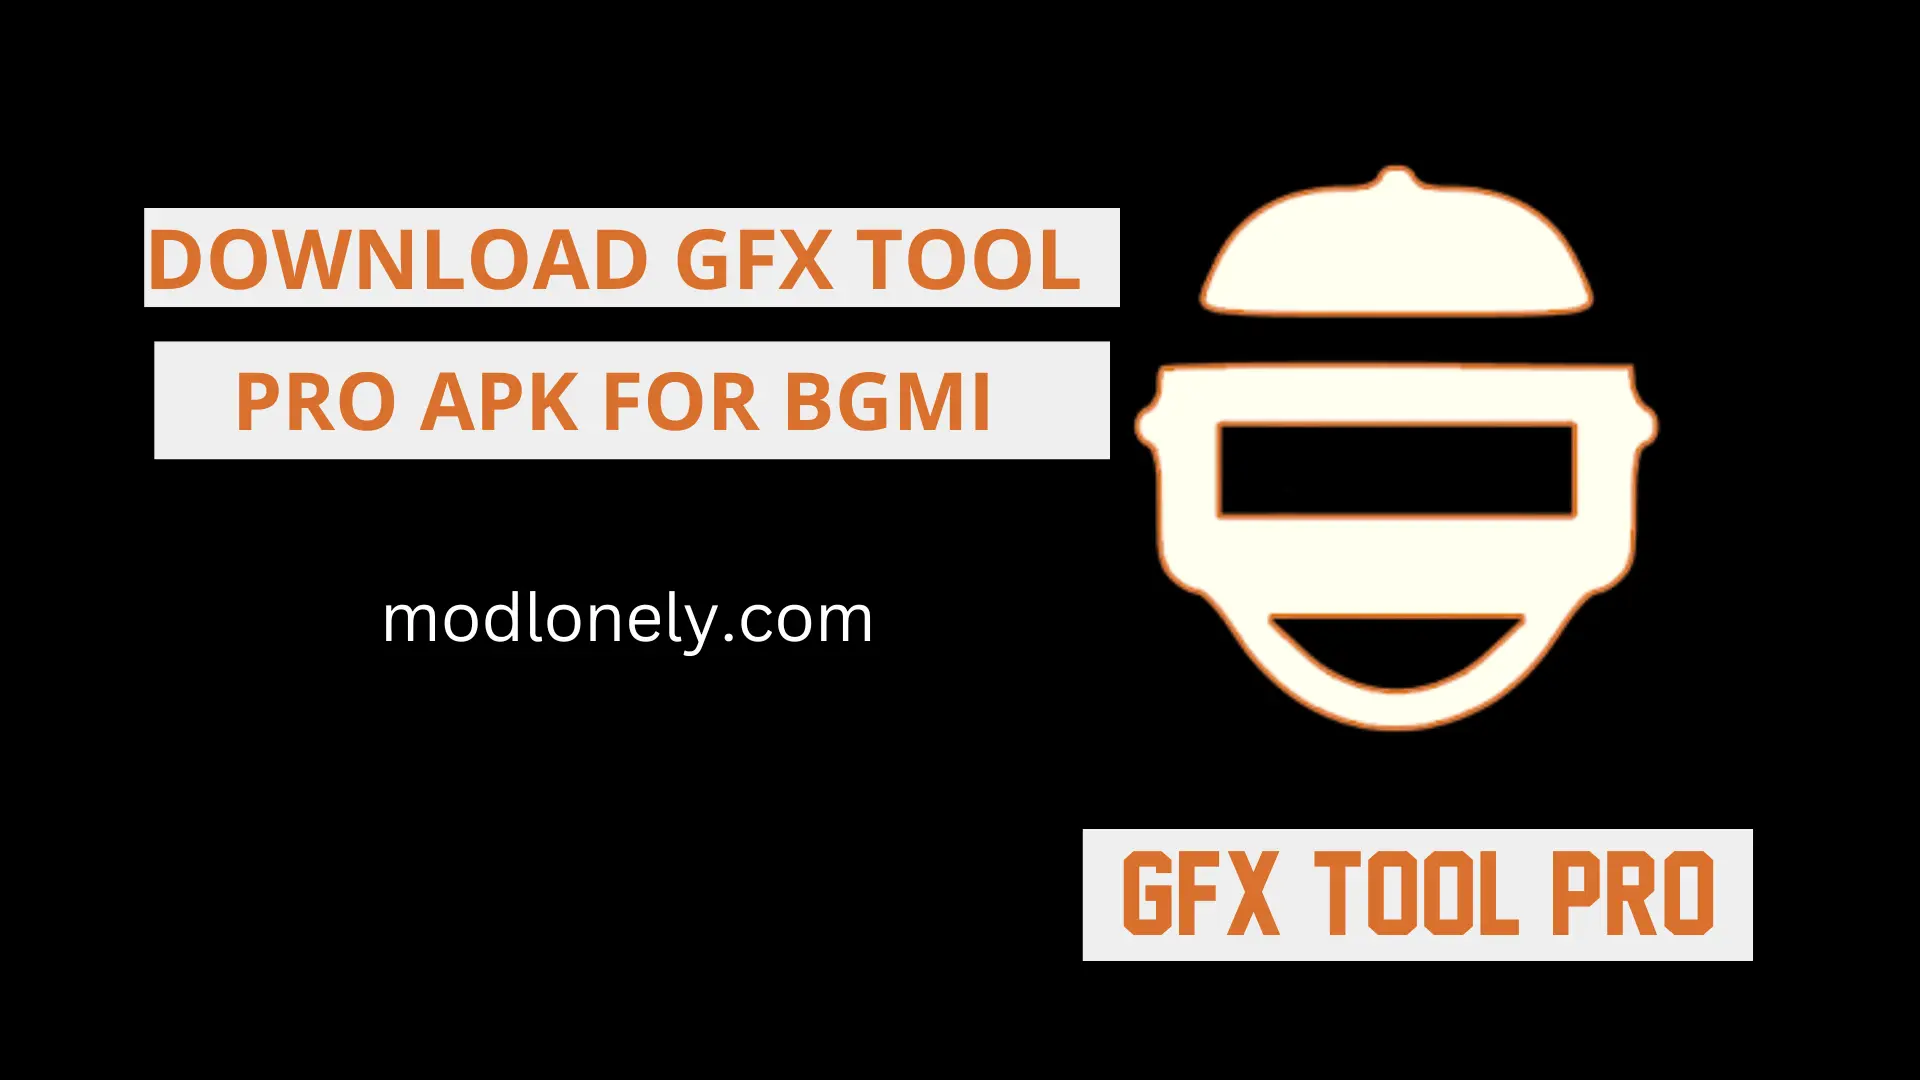 GFX Tool Pro for BGMI